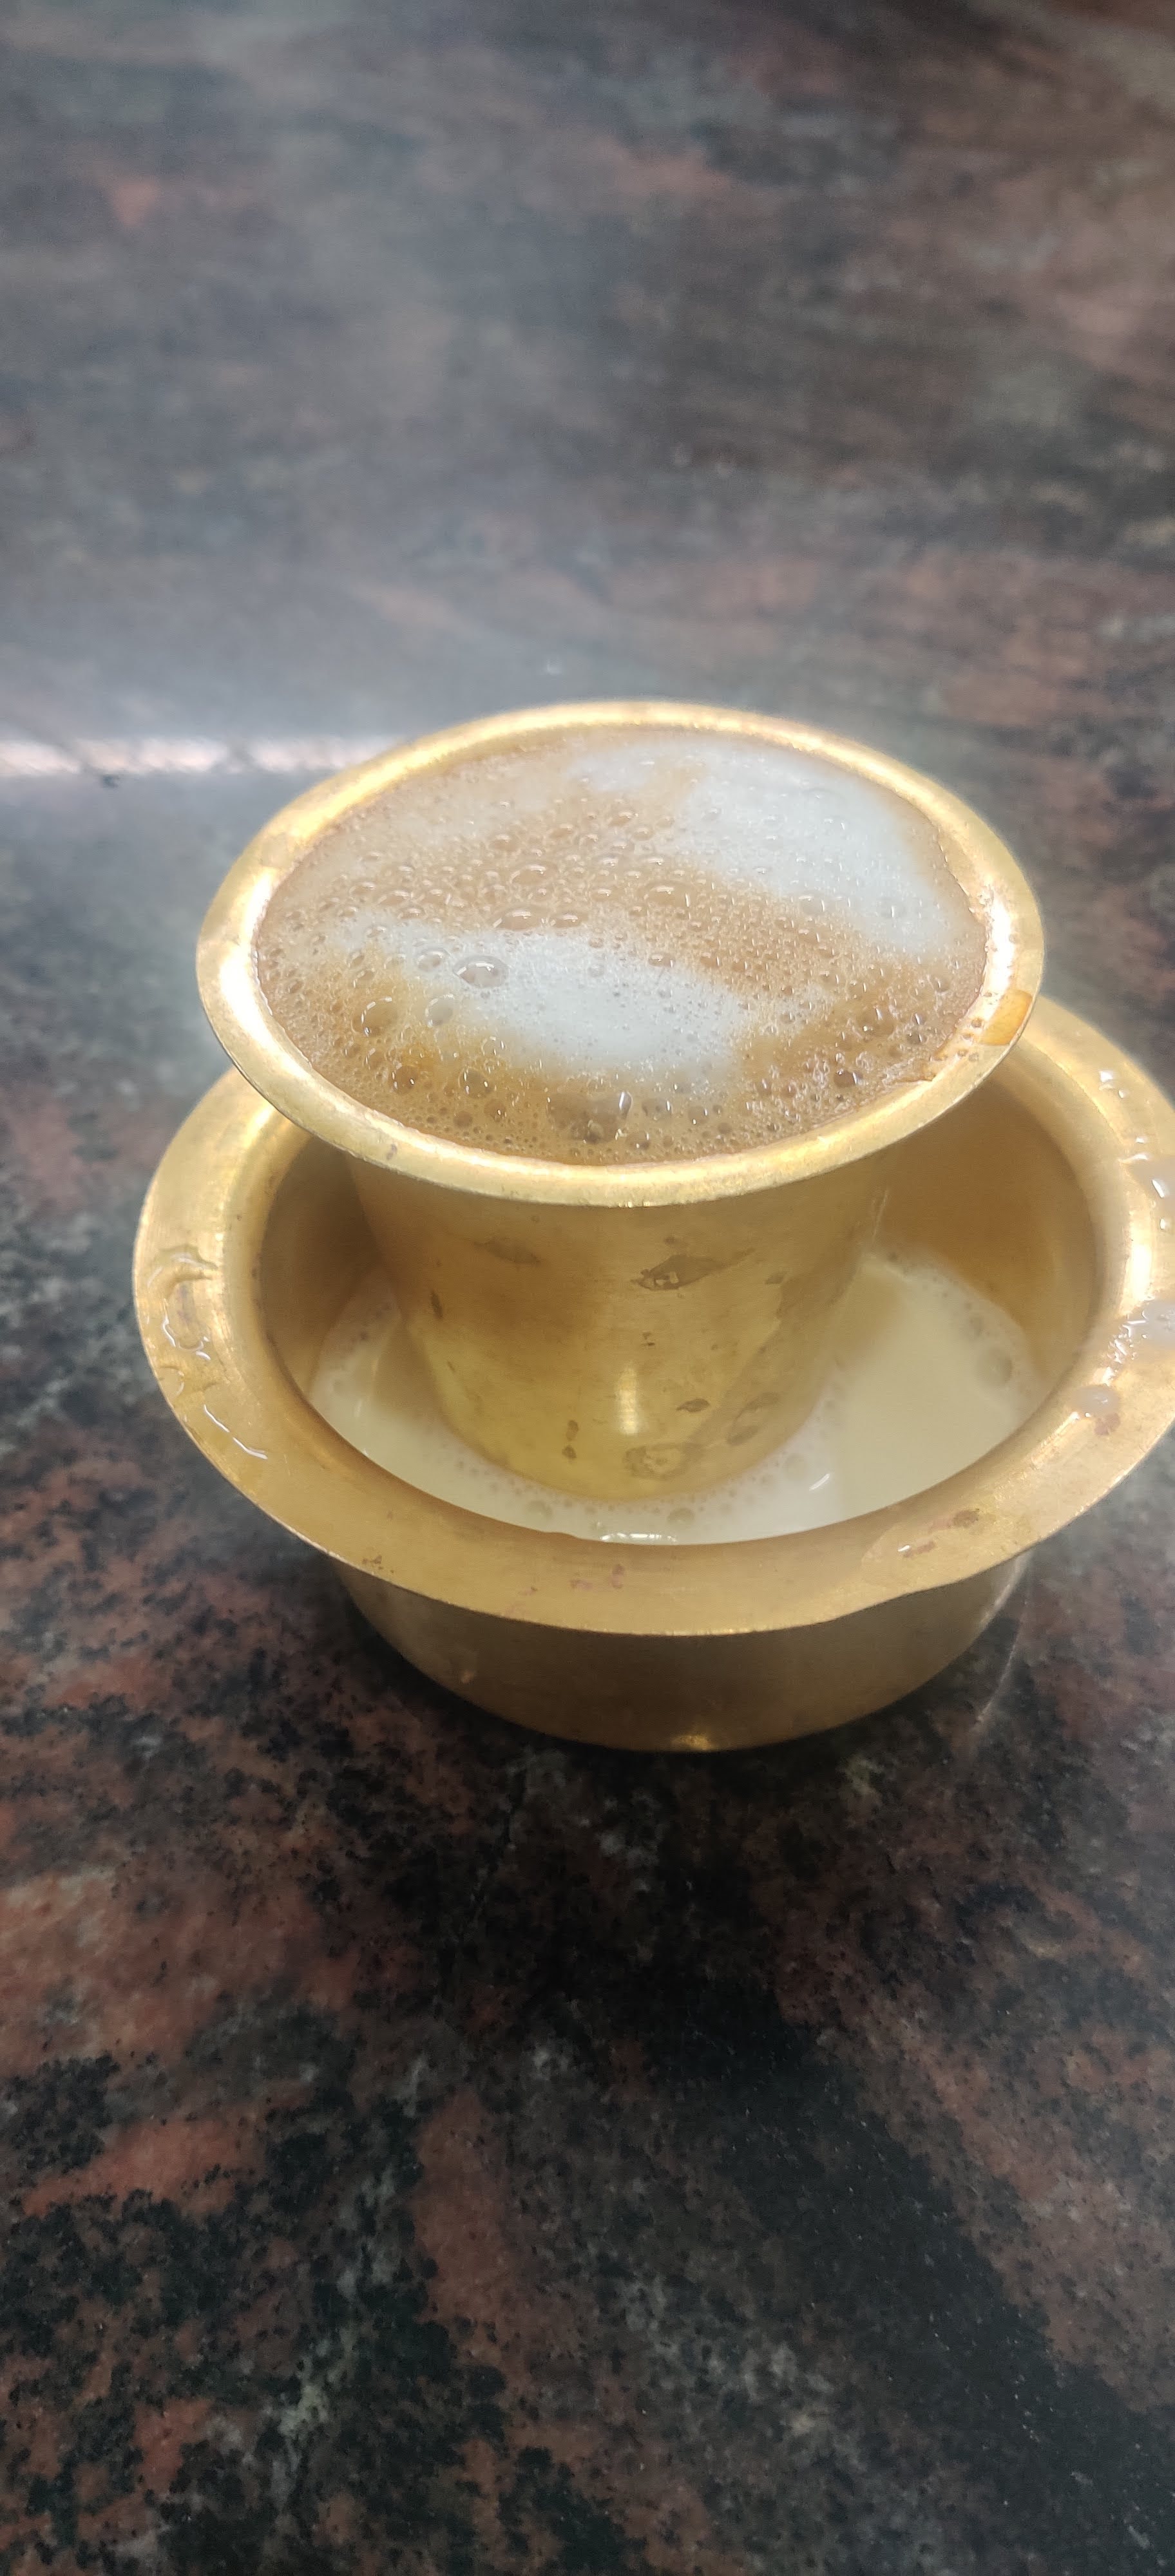 Kumbakonam's famous degree coffee